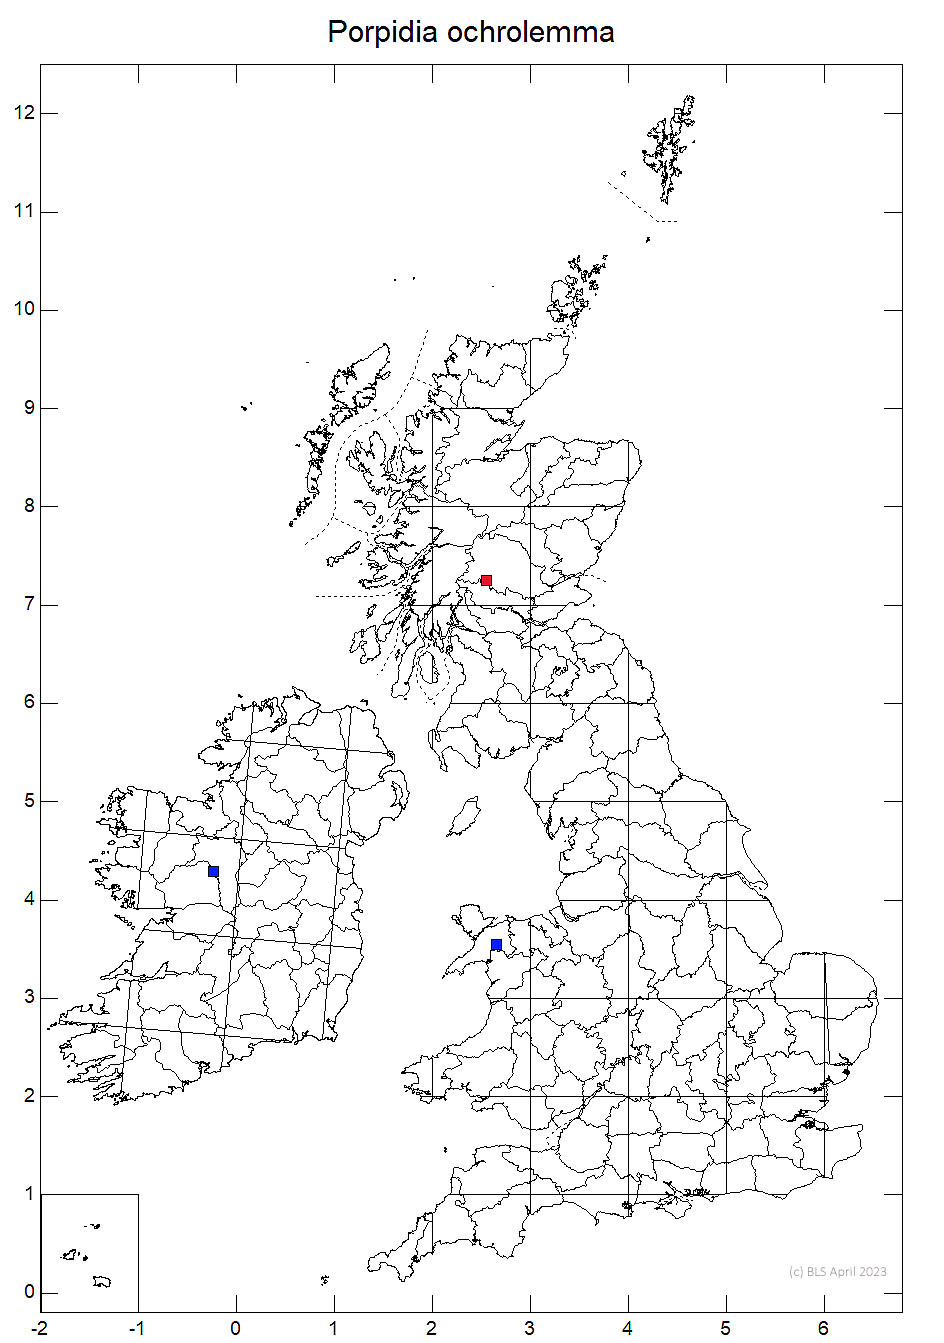 Porpidia ochrolemma 10km sq distribution map